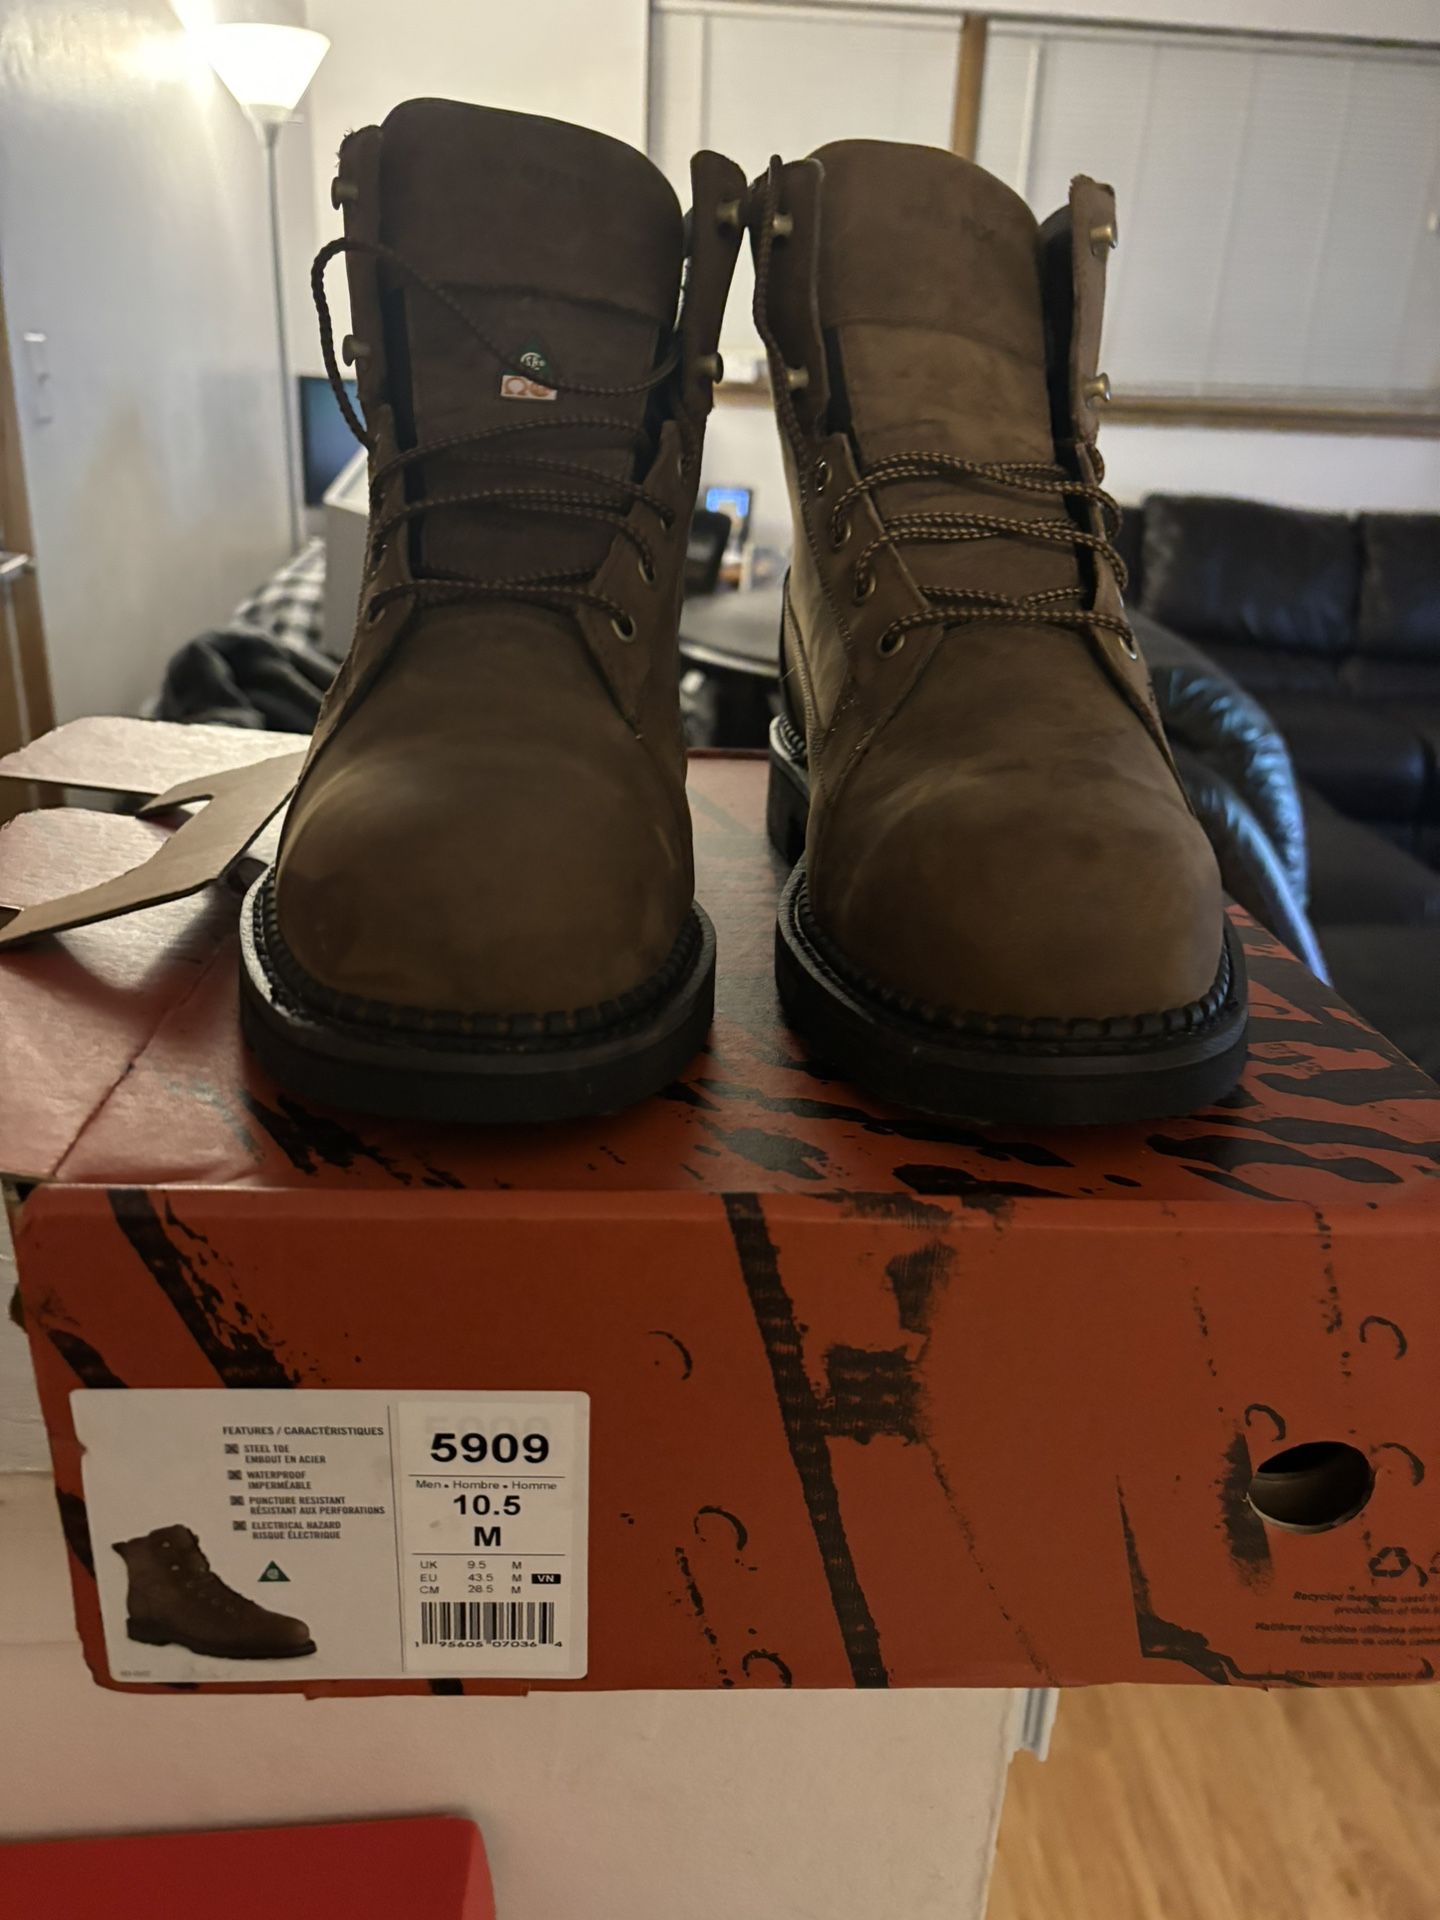 Steel Toe Boots 